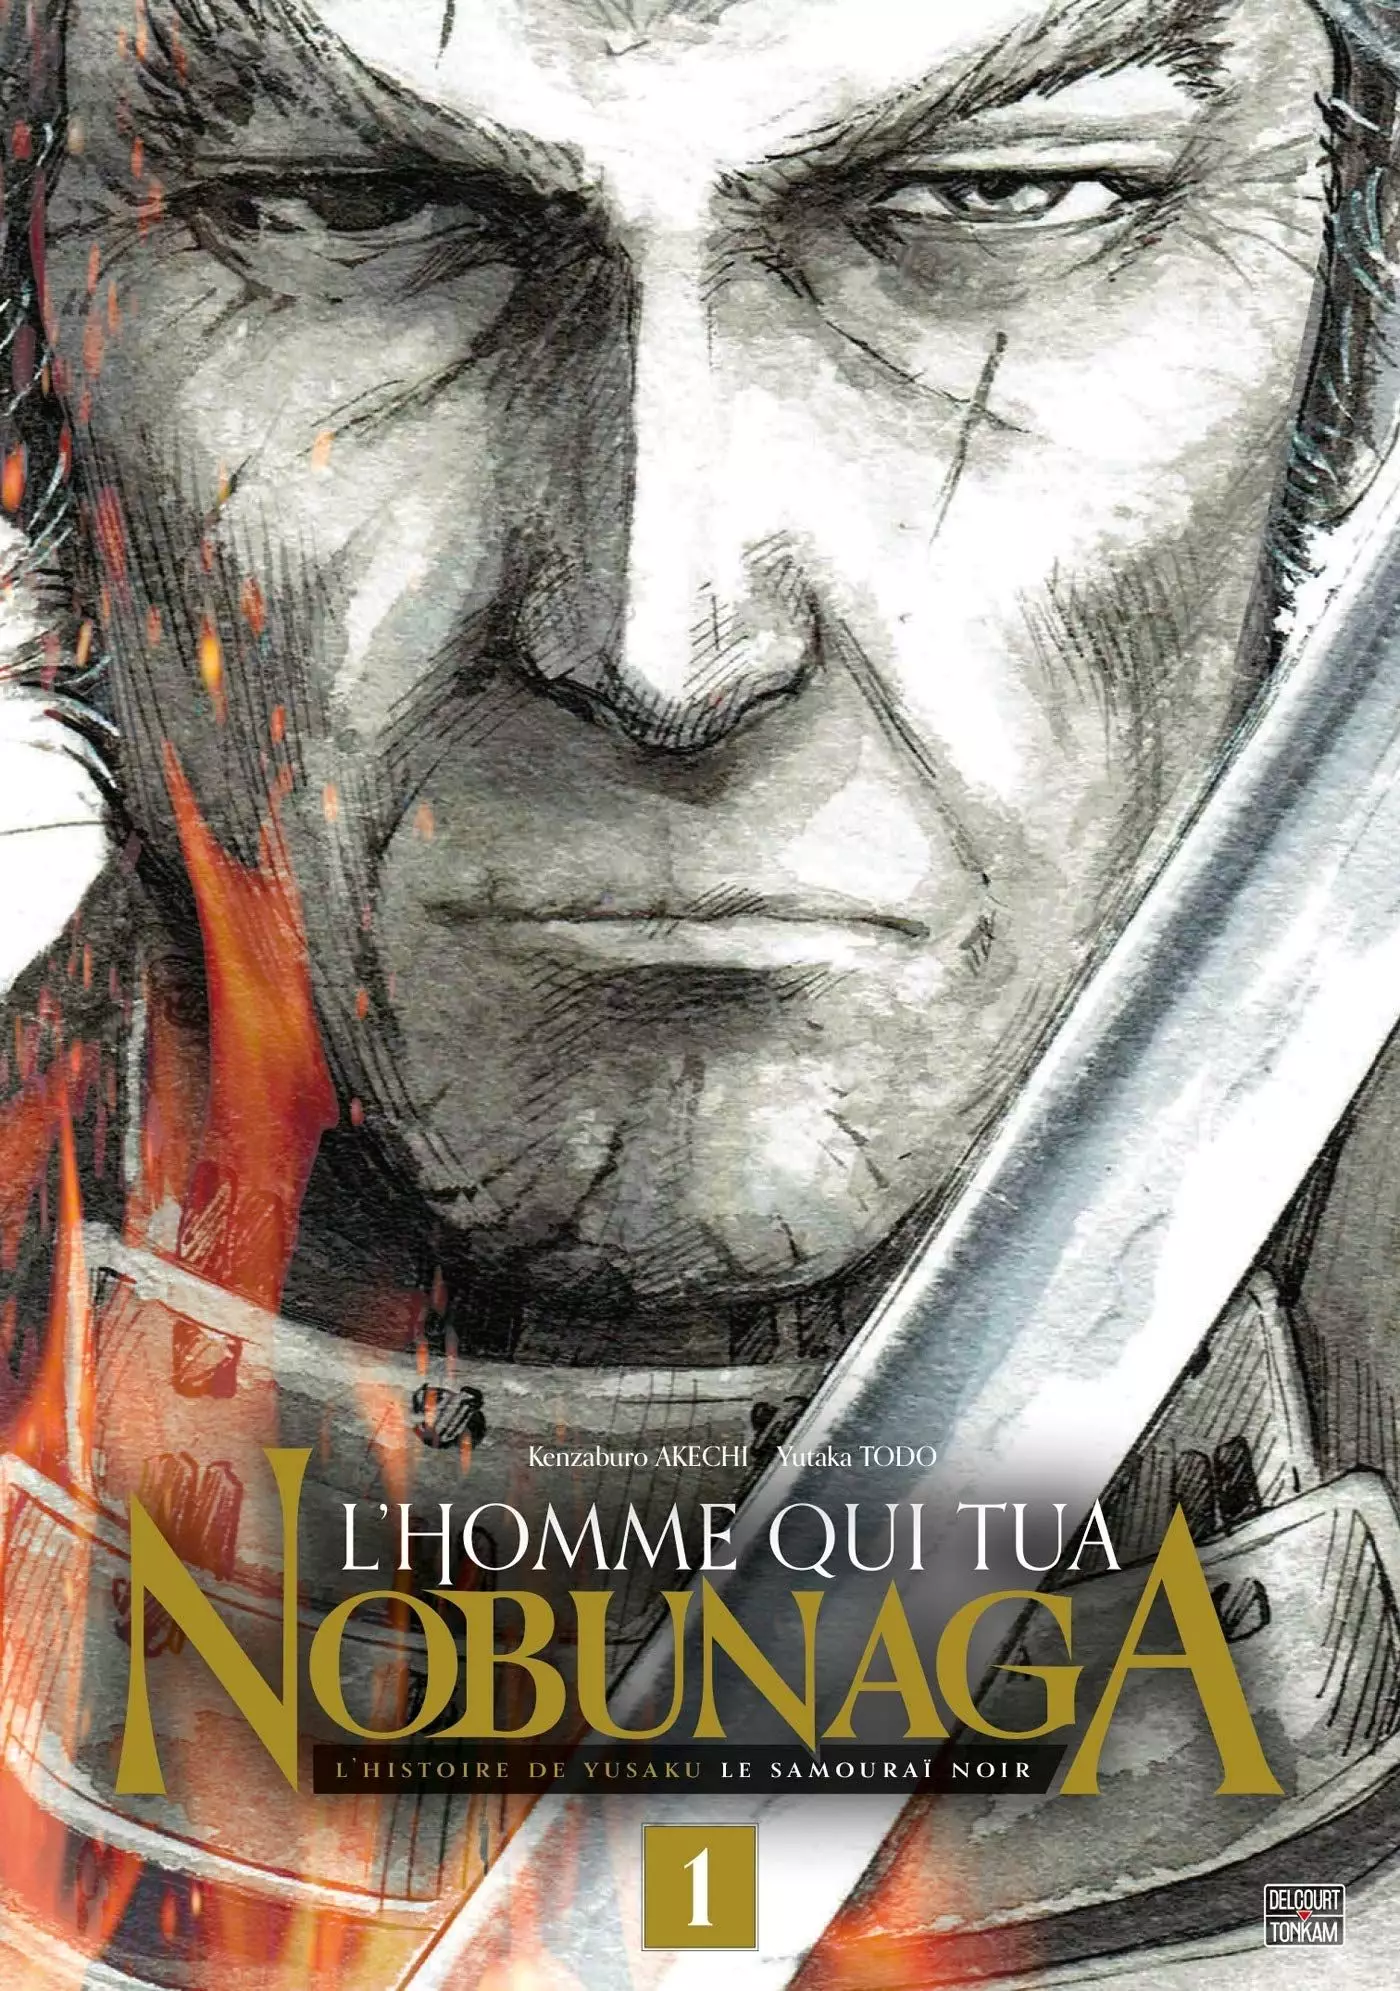 Homme qui tua Nobunaga (l') - Manga série - Manga news